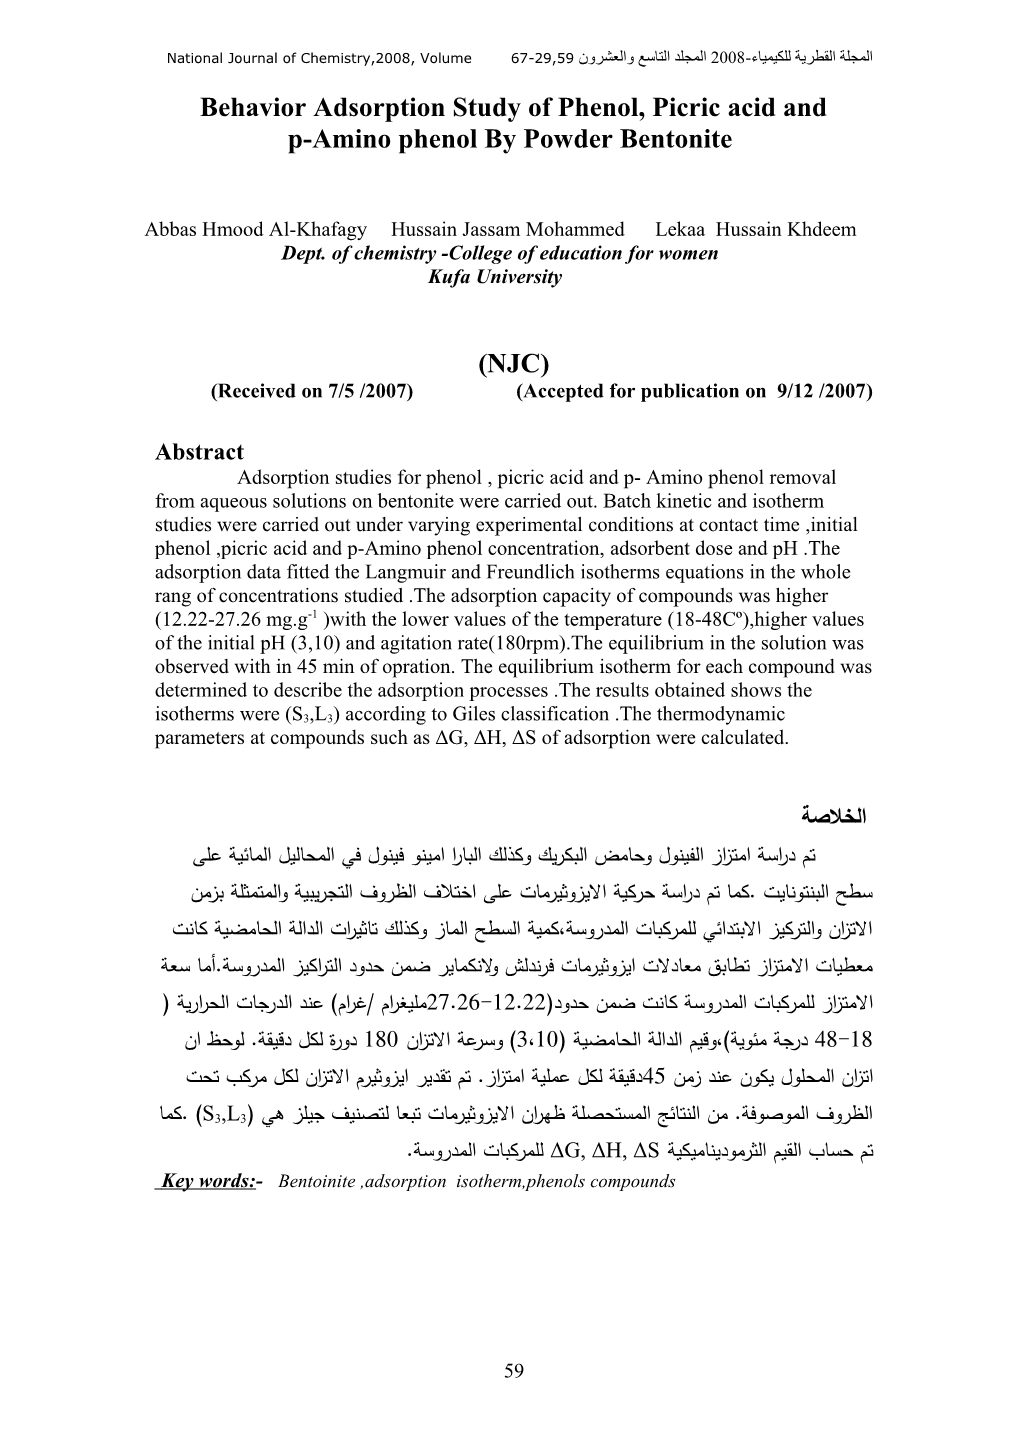 Behavior Adsorption Study of Phenol,Picric Acid and P-Amino Phenol by Powder Bentonite